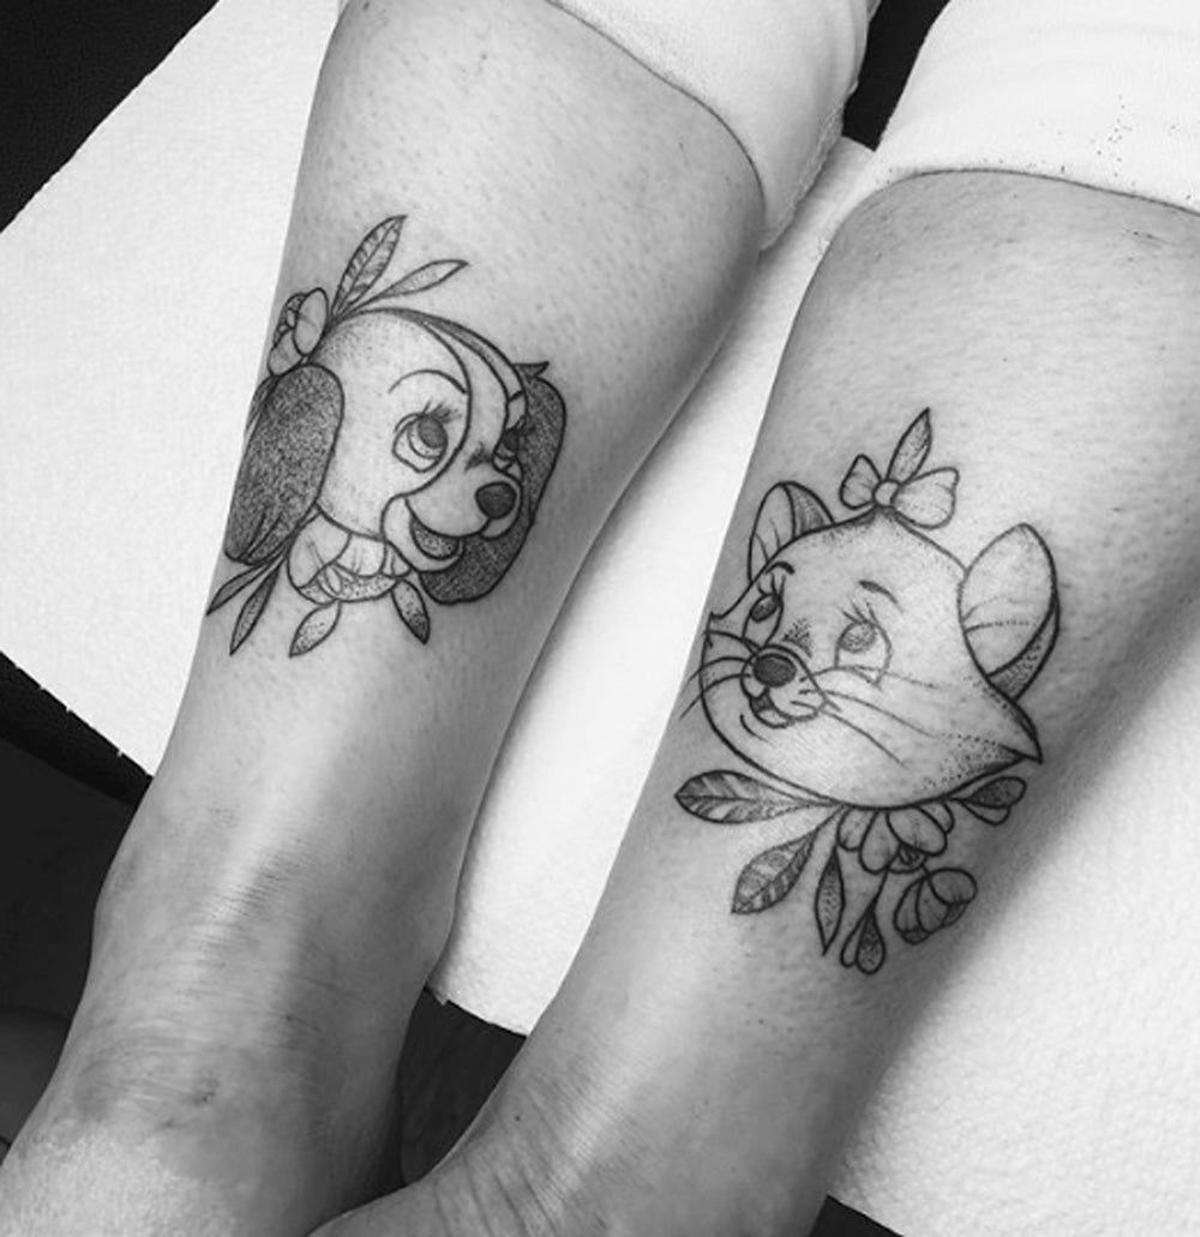 Tatuajes Disney: en blanco y negro